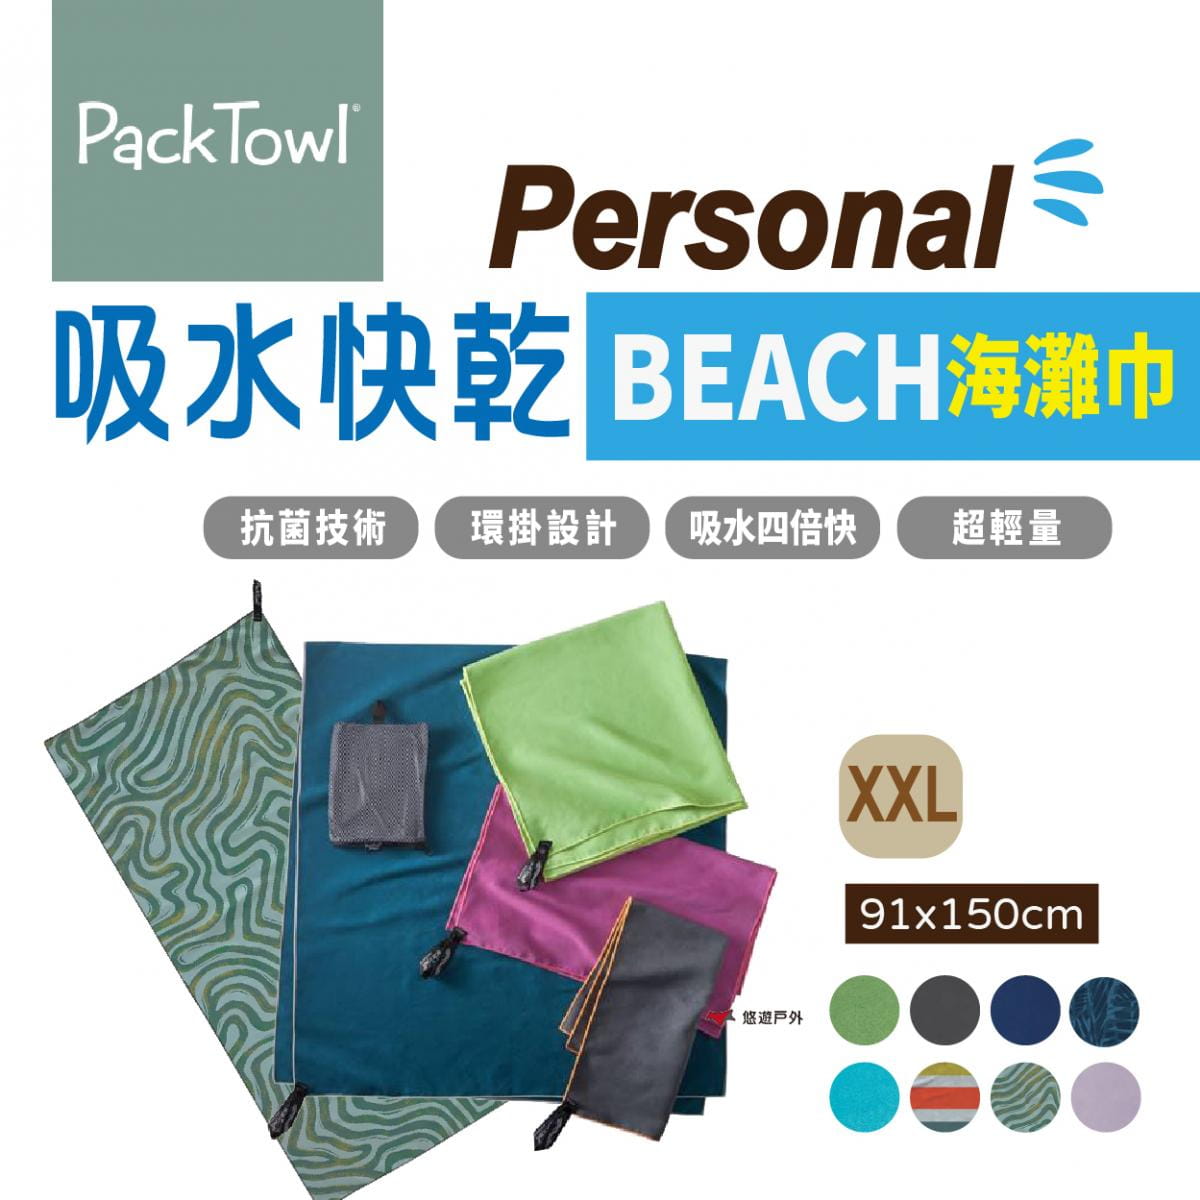 【PACKTOWL】Personal 吸水快乾海灘巾_XXL BEACH (悠遊戶外) 0